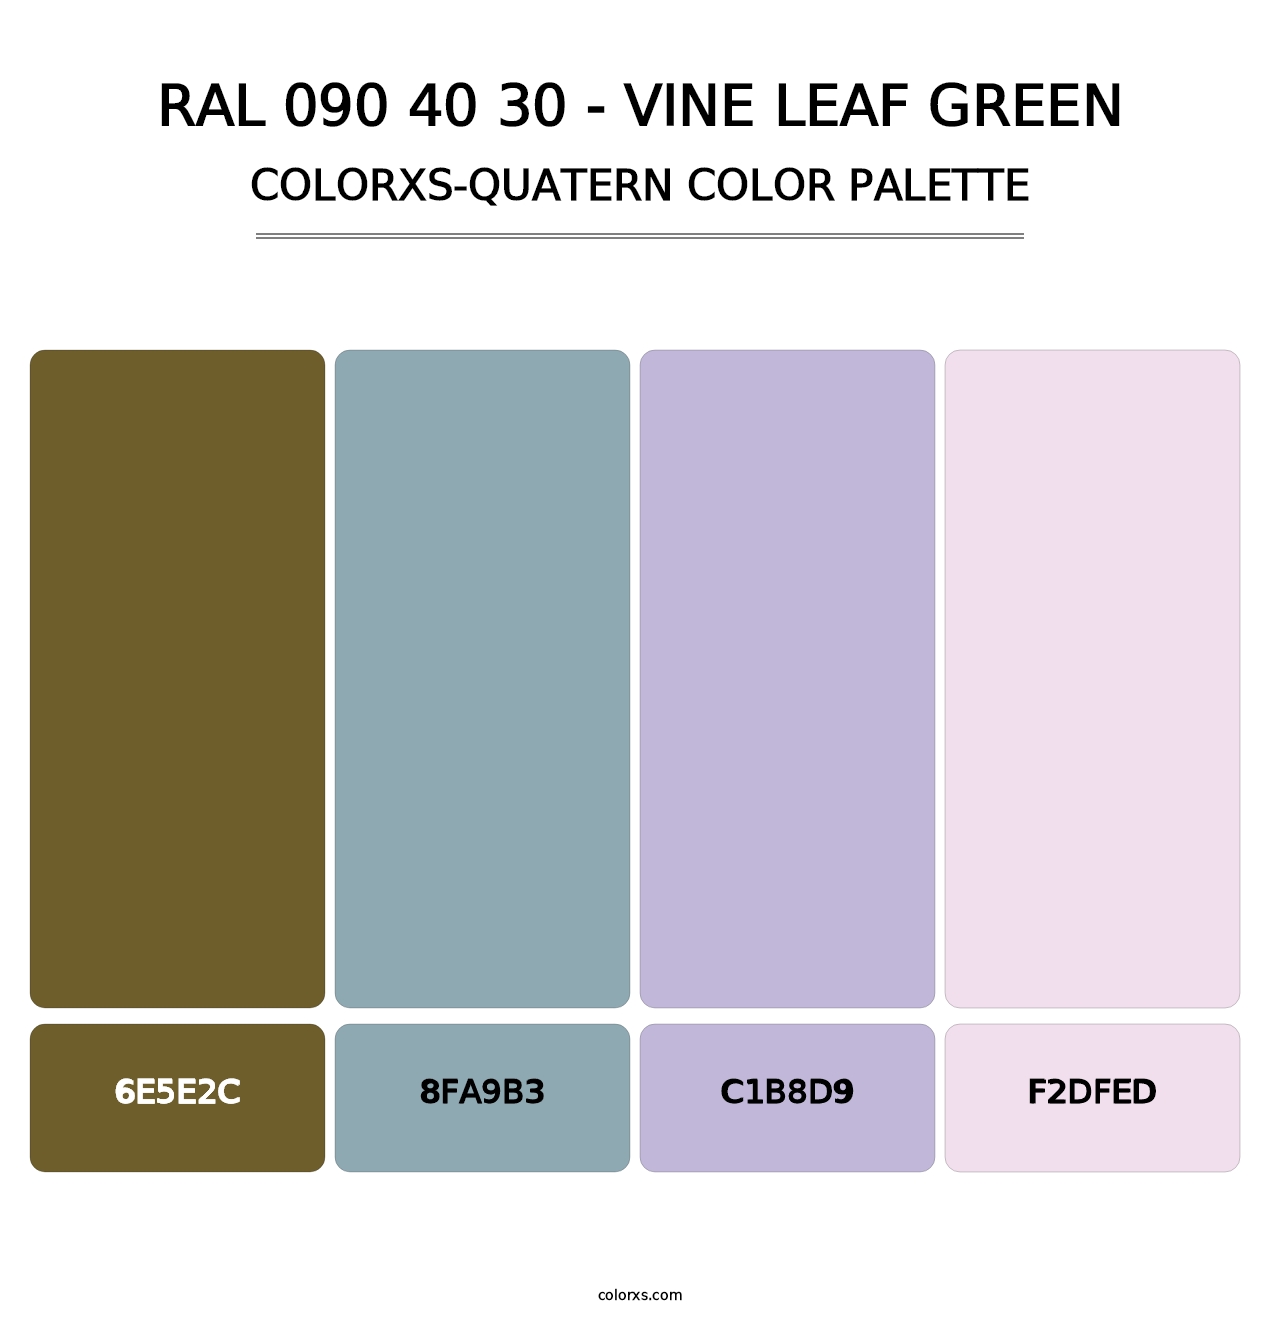 RAL 090 40 30 - Vine Leaf Green - Colorxs Quatern Palette